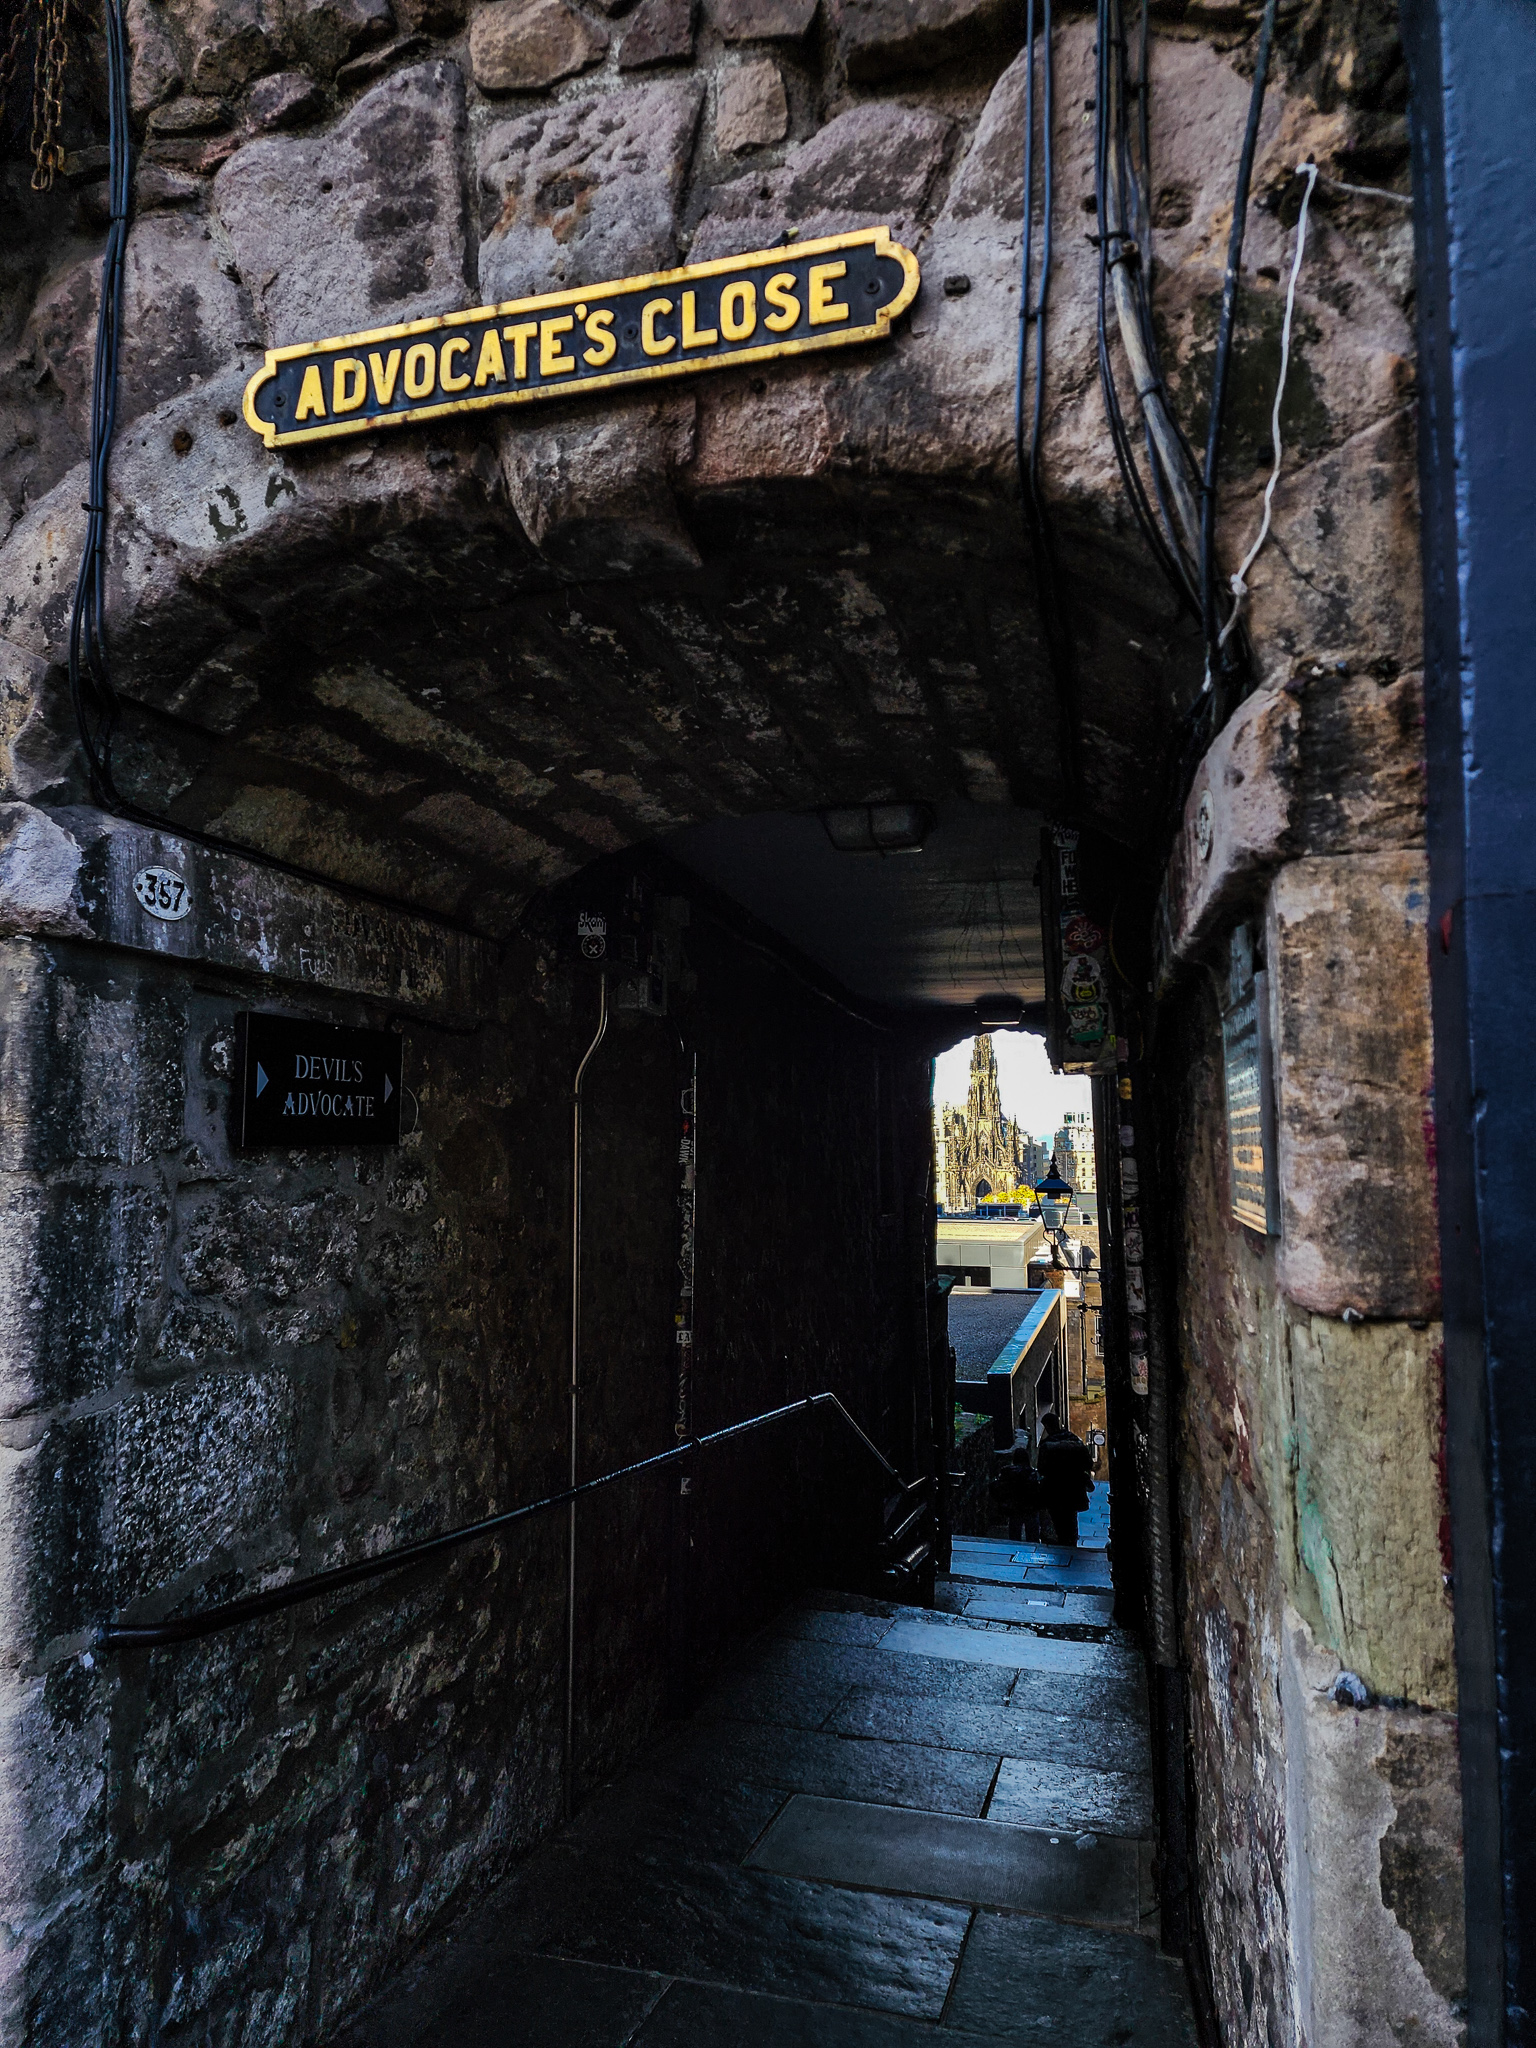 Edinburgh royal mile narrow side alley close